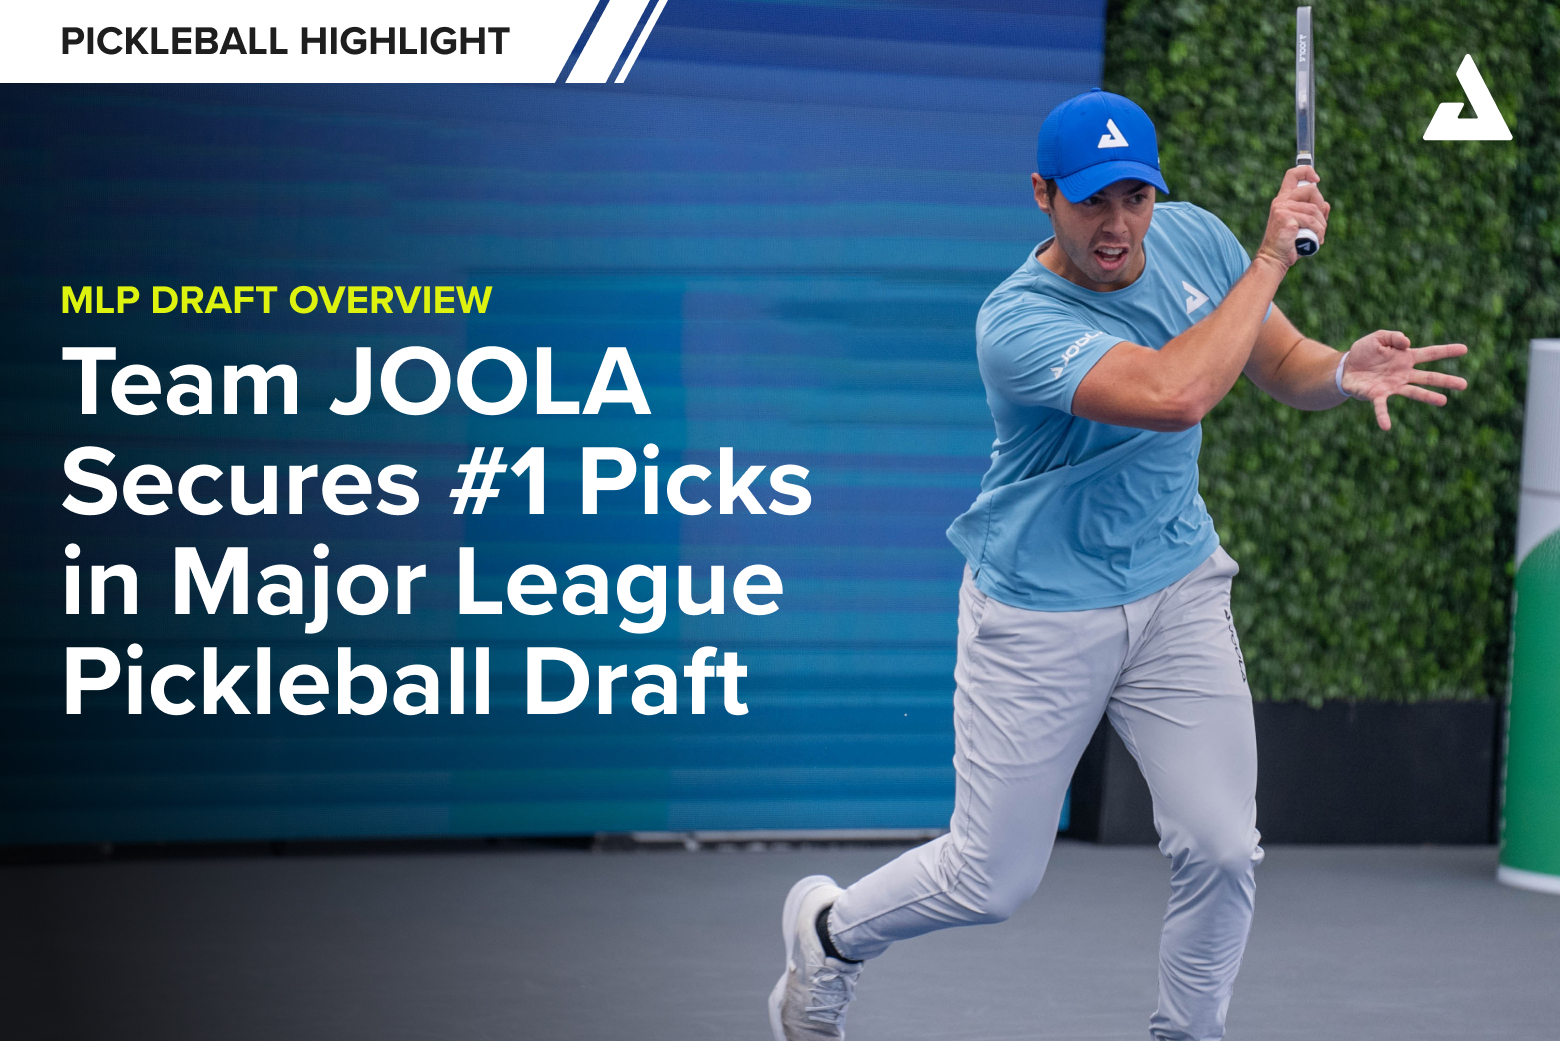 Team JOOLA Secures #1 Picks in Major League Pickleball Draft